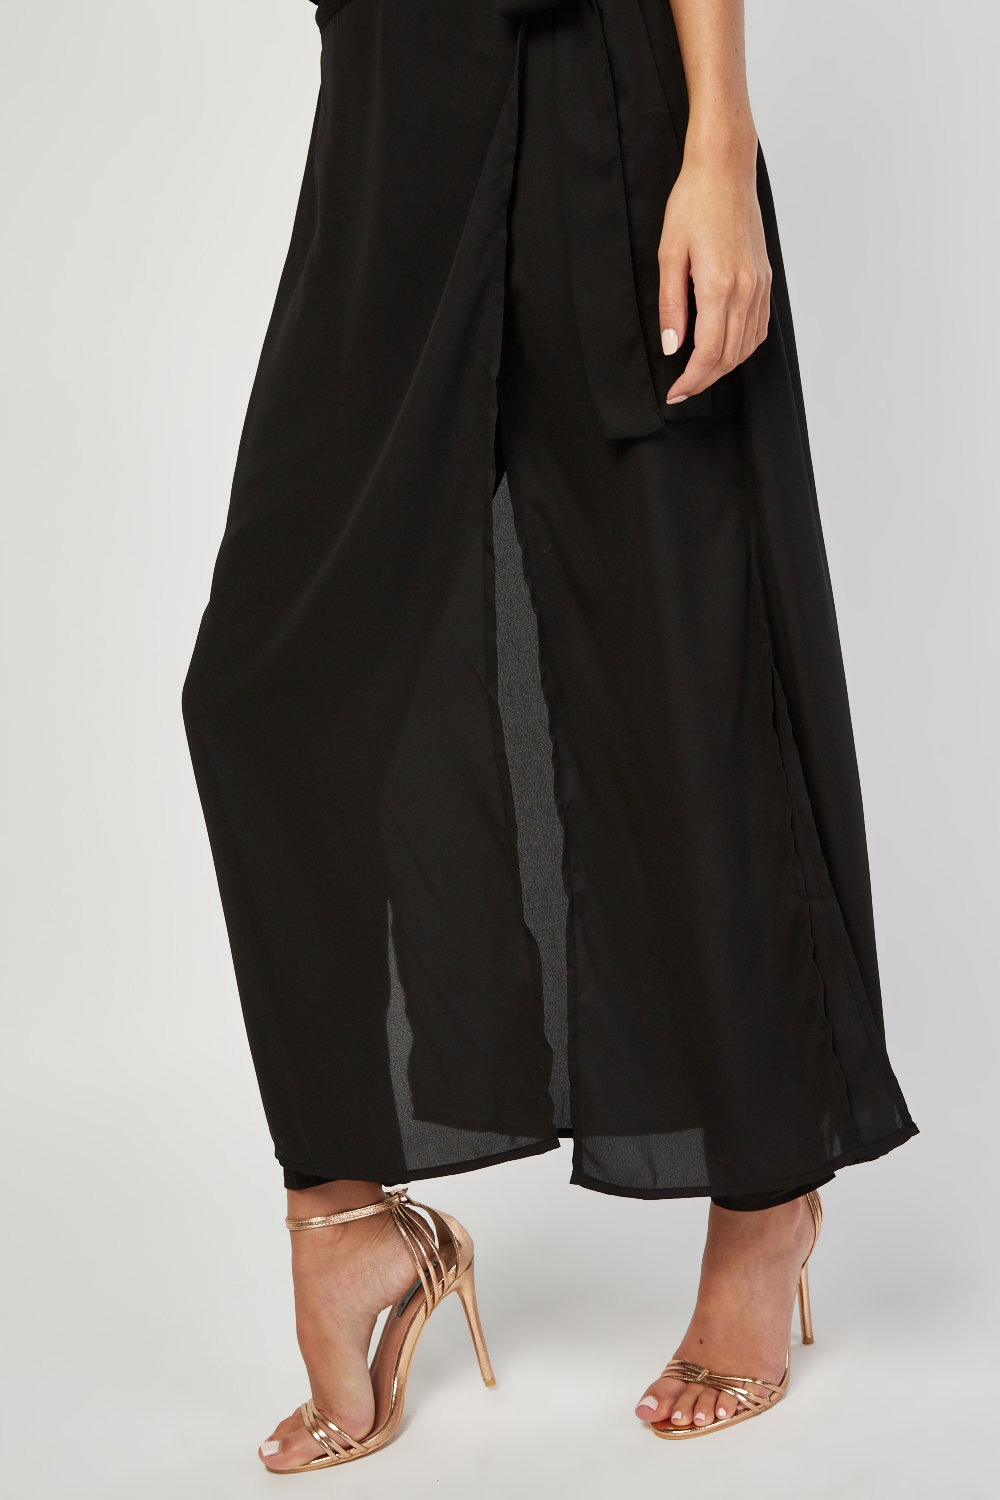 Chiffon Skirt Overlay Trousers - Just $7